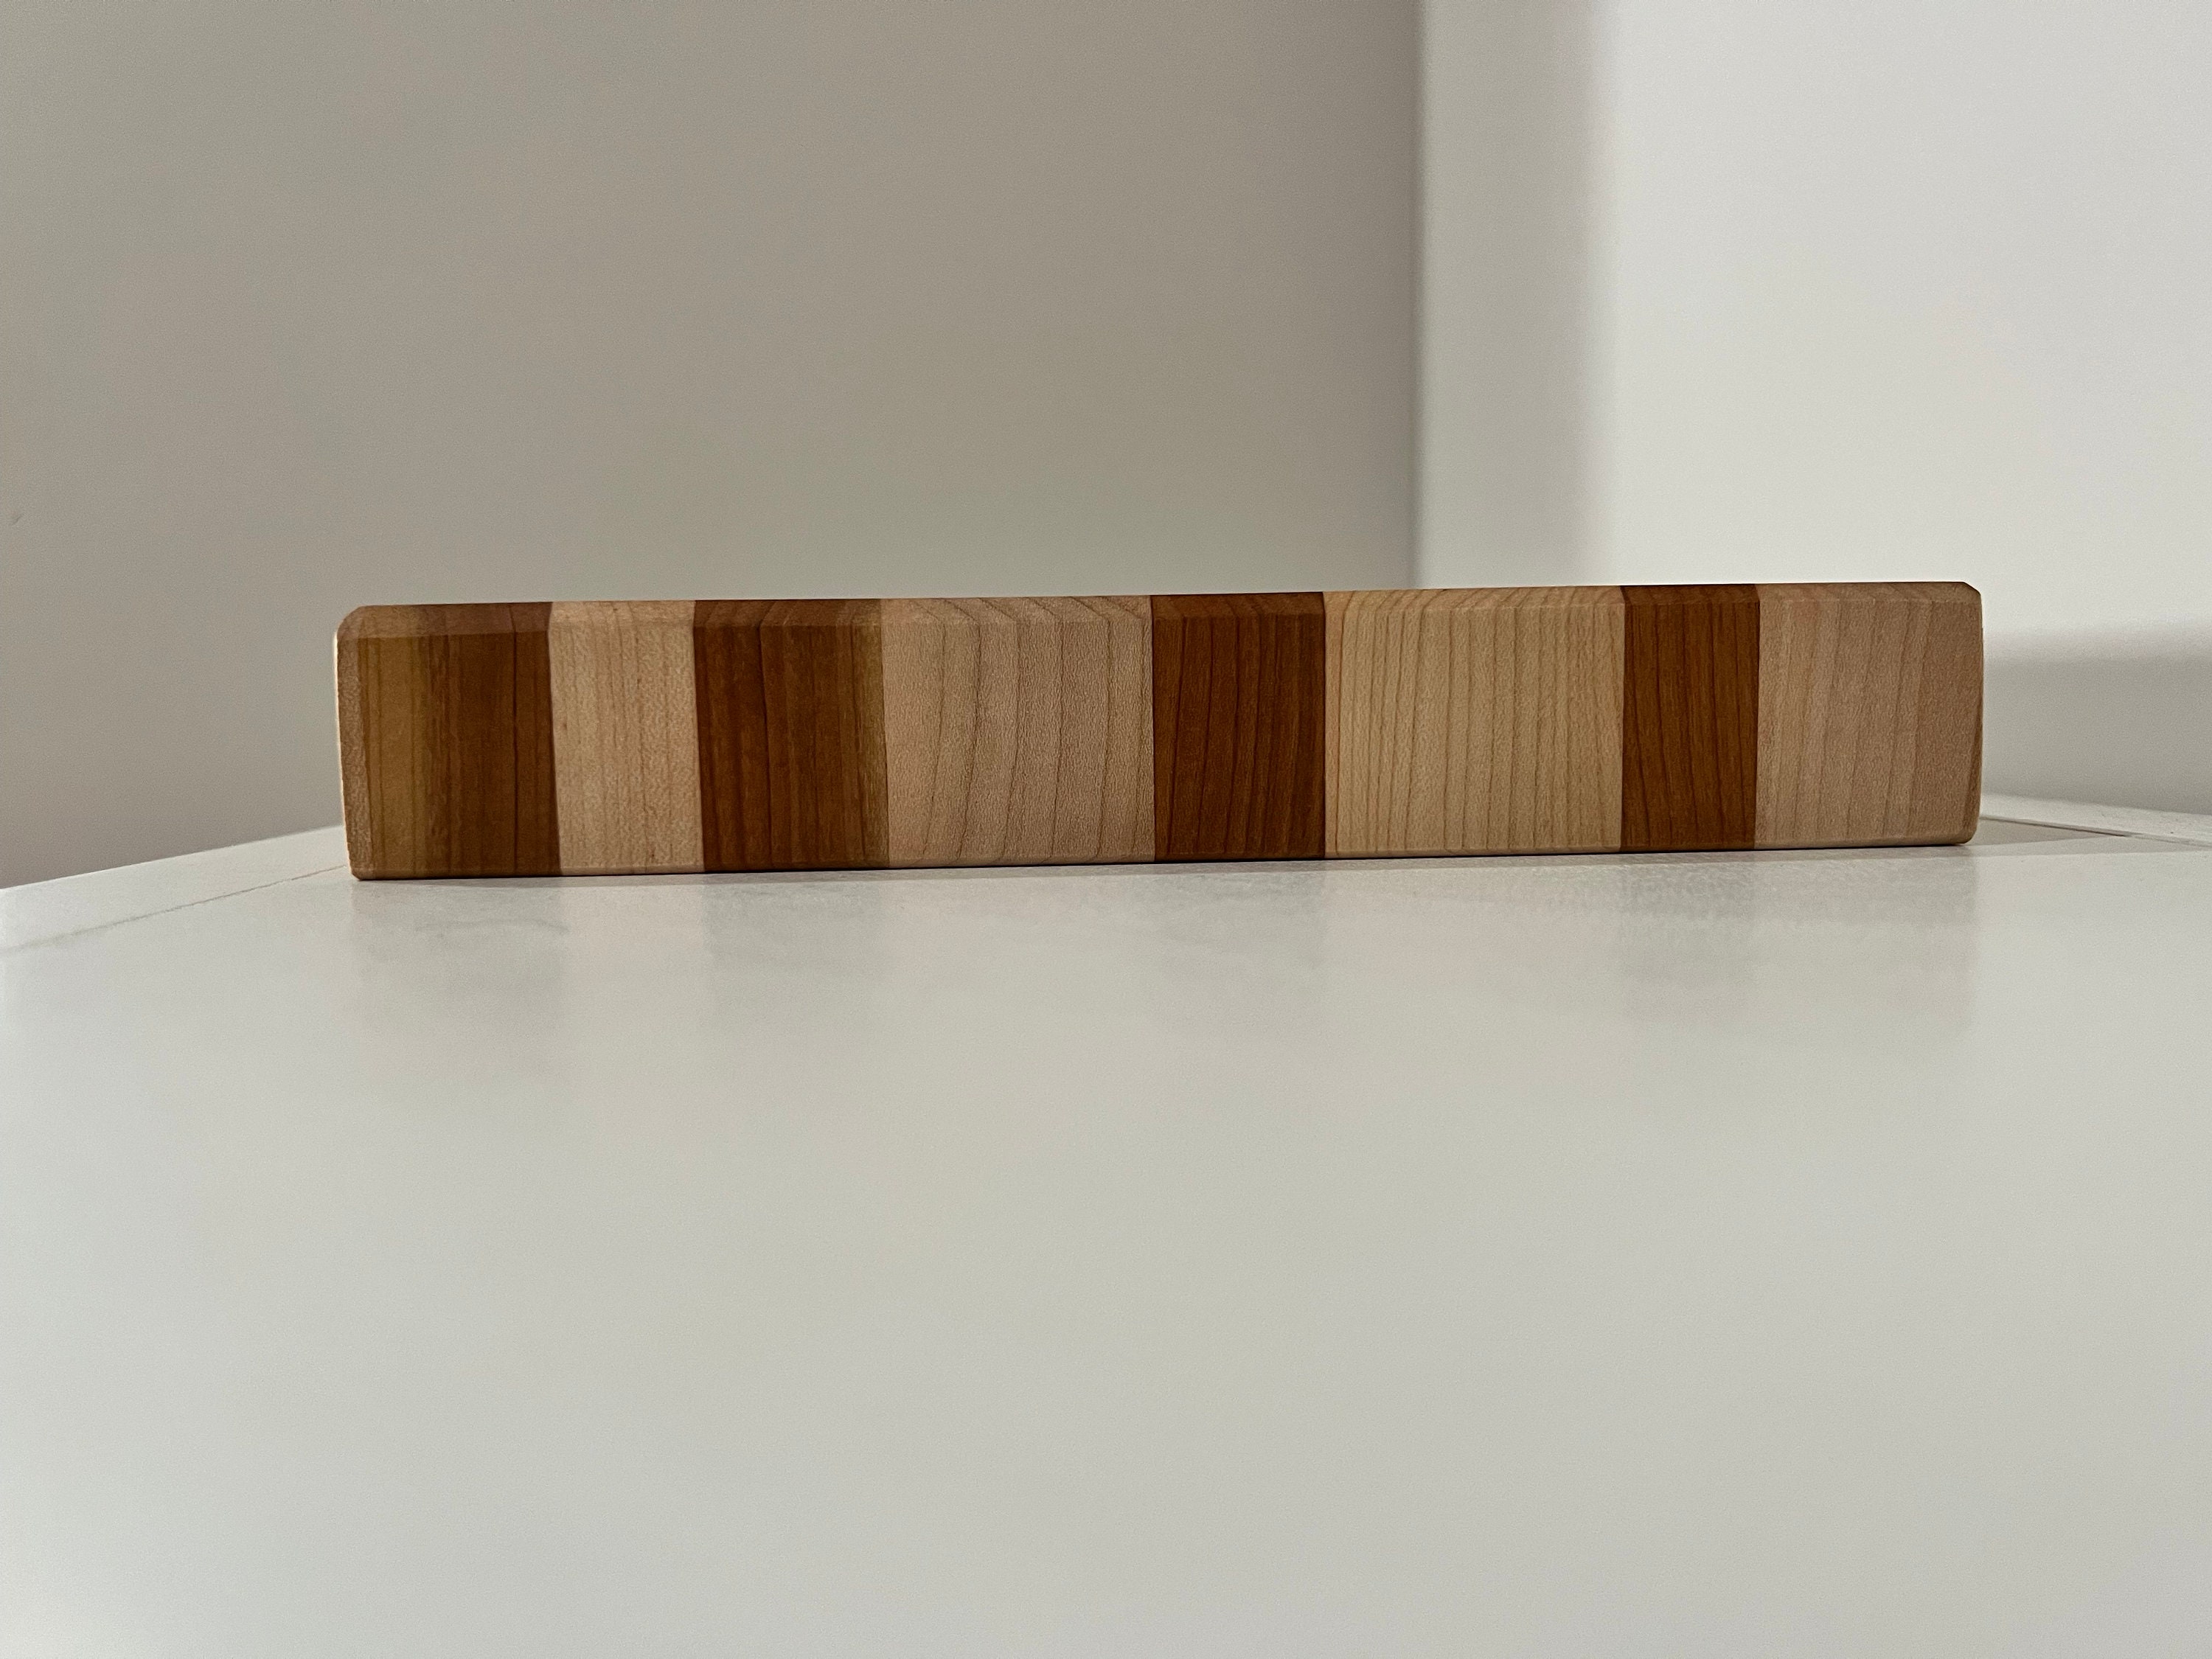 Medium Cutting Board - Maple, Mahogany, Cherry